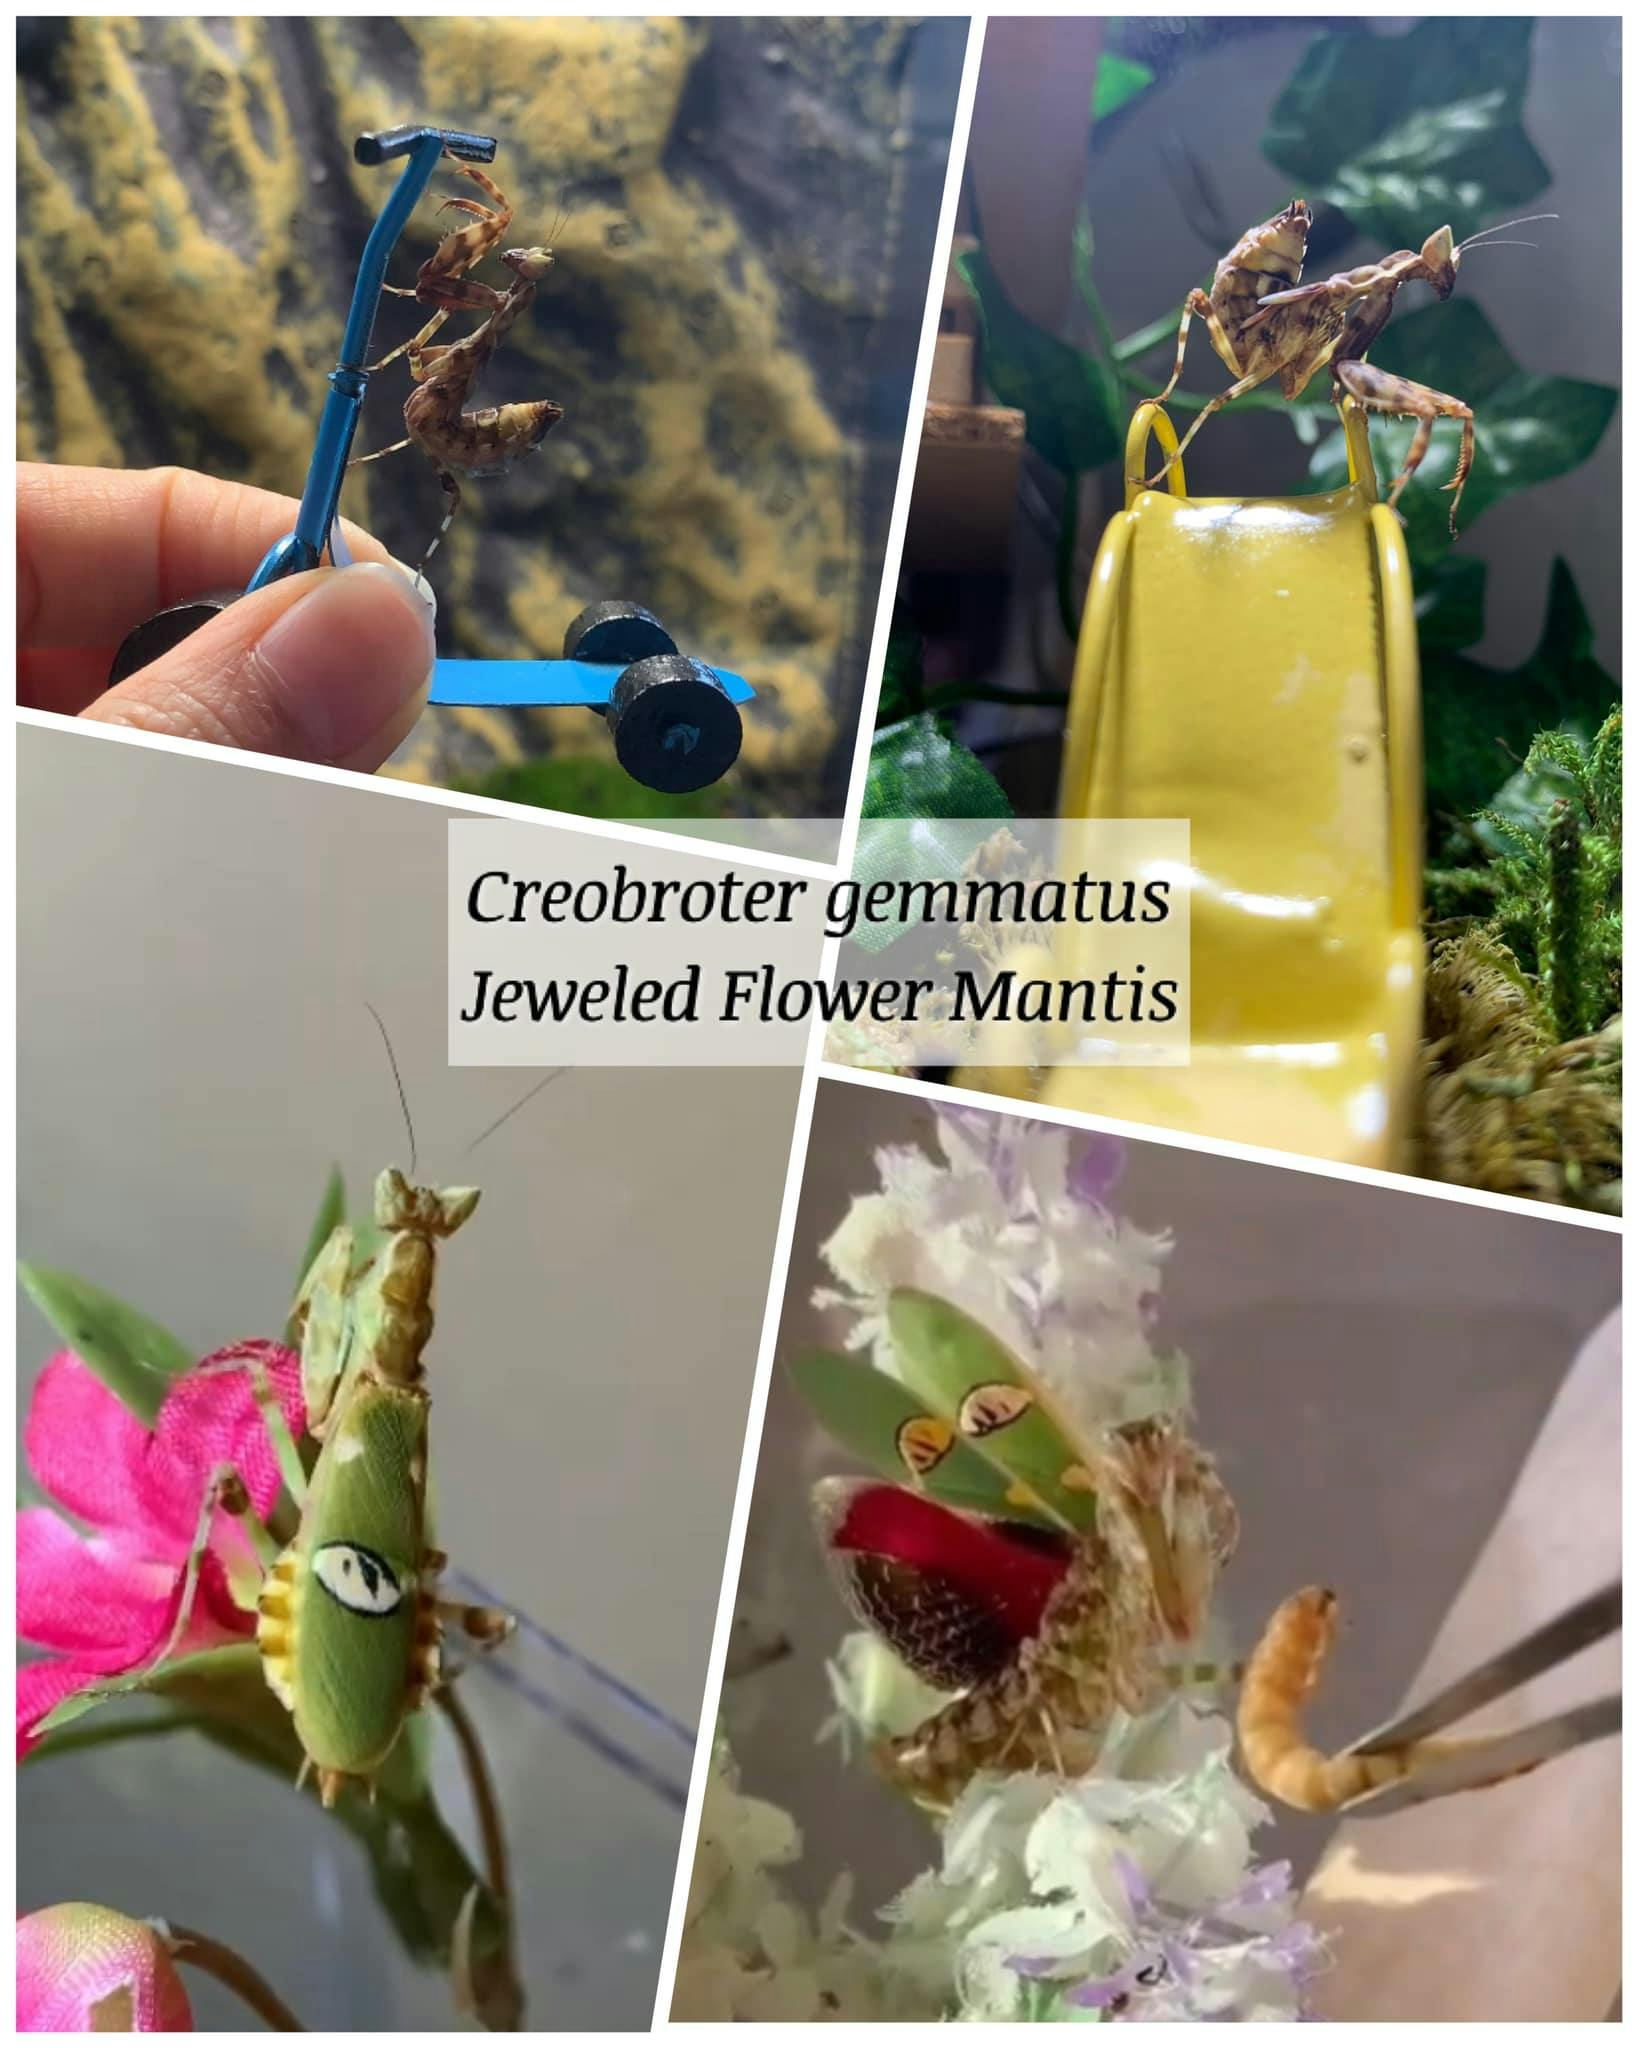 Jeweled Flower Mantis - Creobroter gemmatus